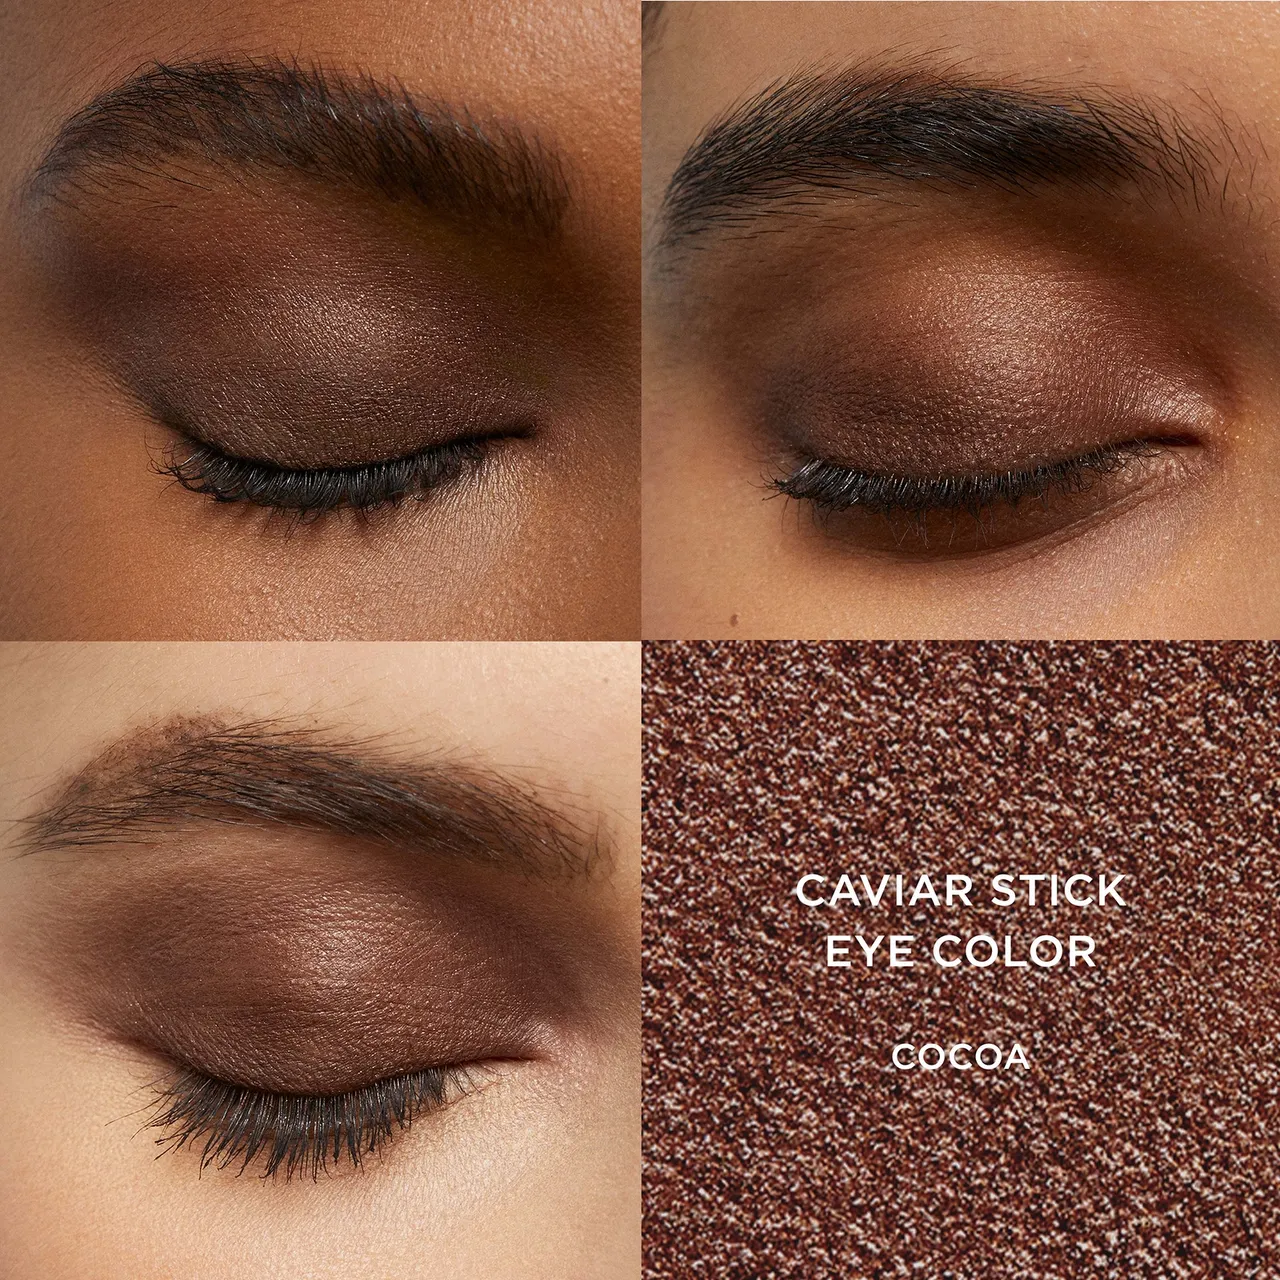 Laura Mercier Caviar Stick Eye Colour - 1.64g (Various Shades) - Cocoa